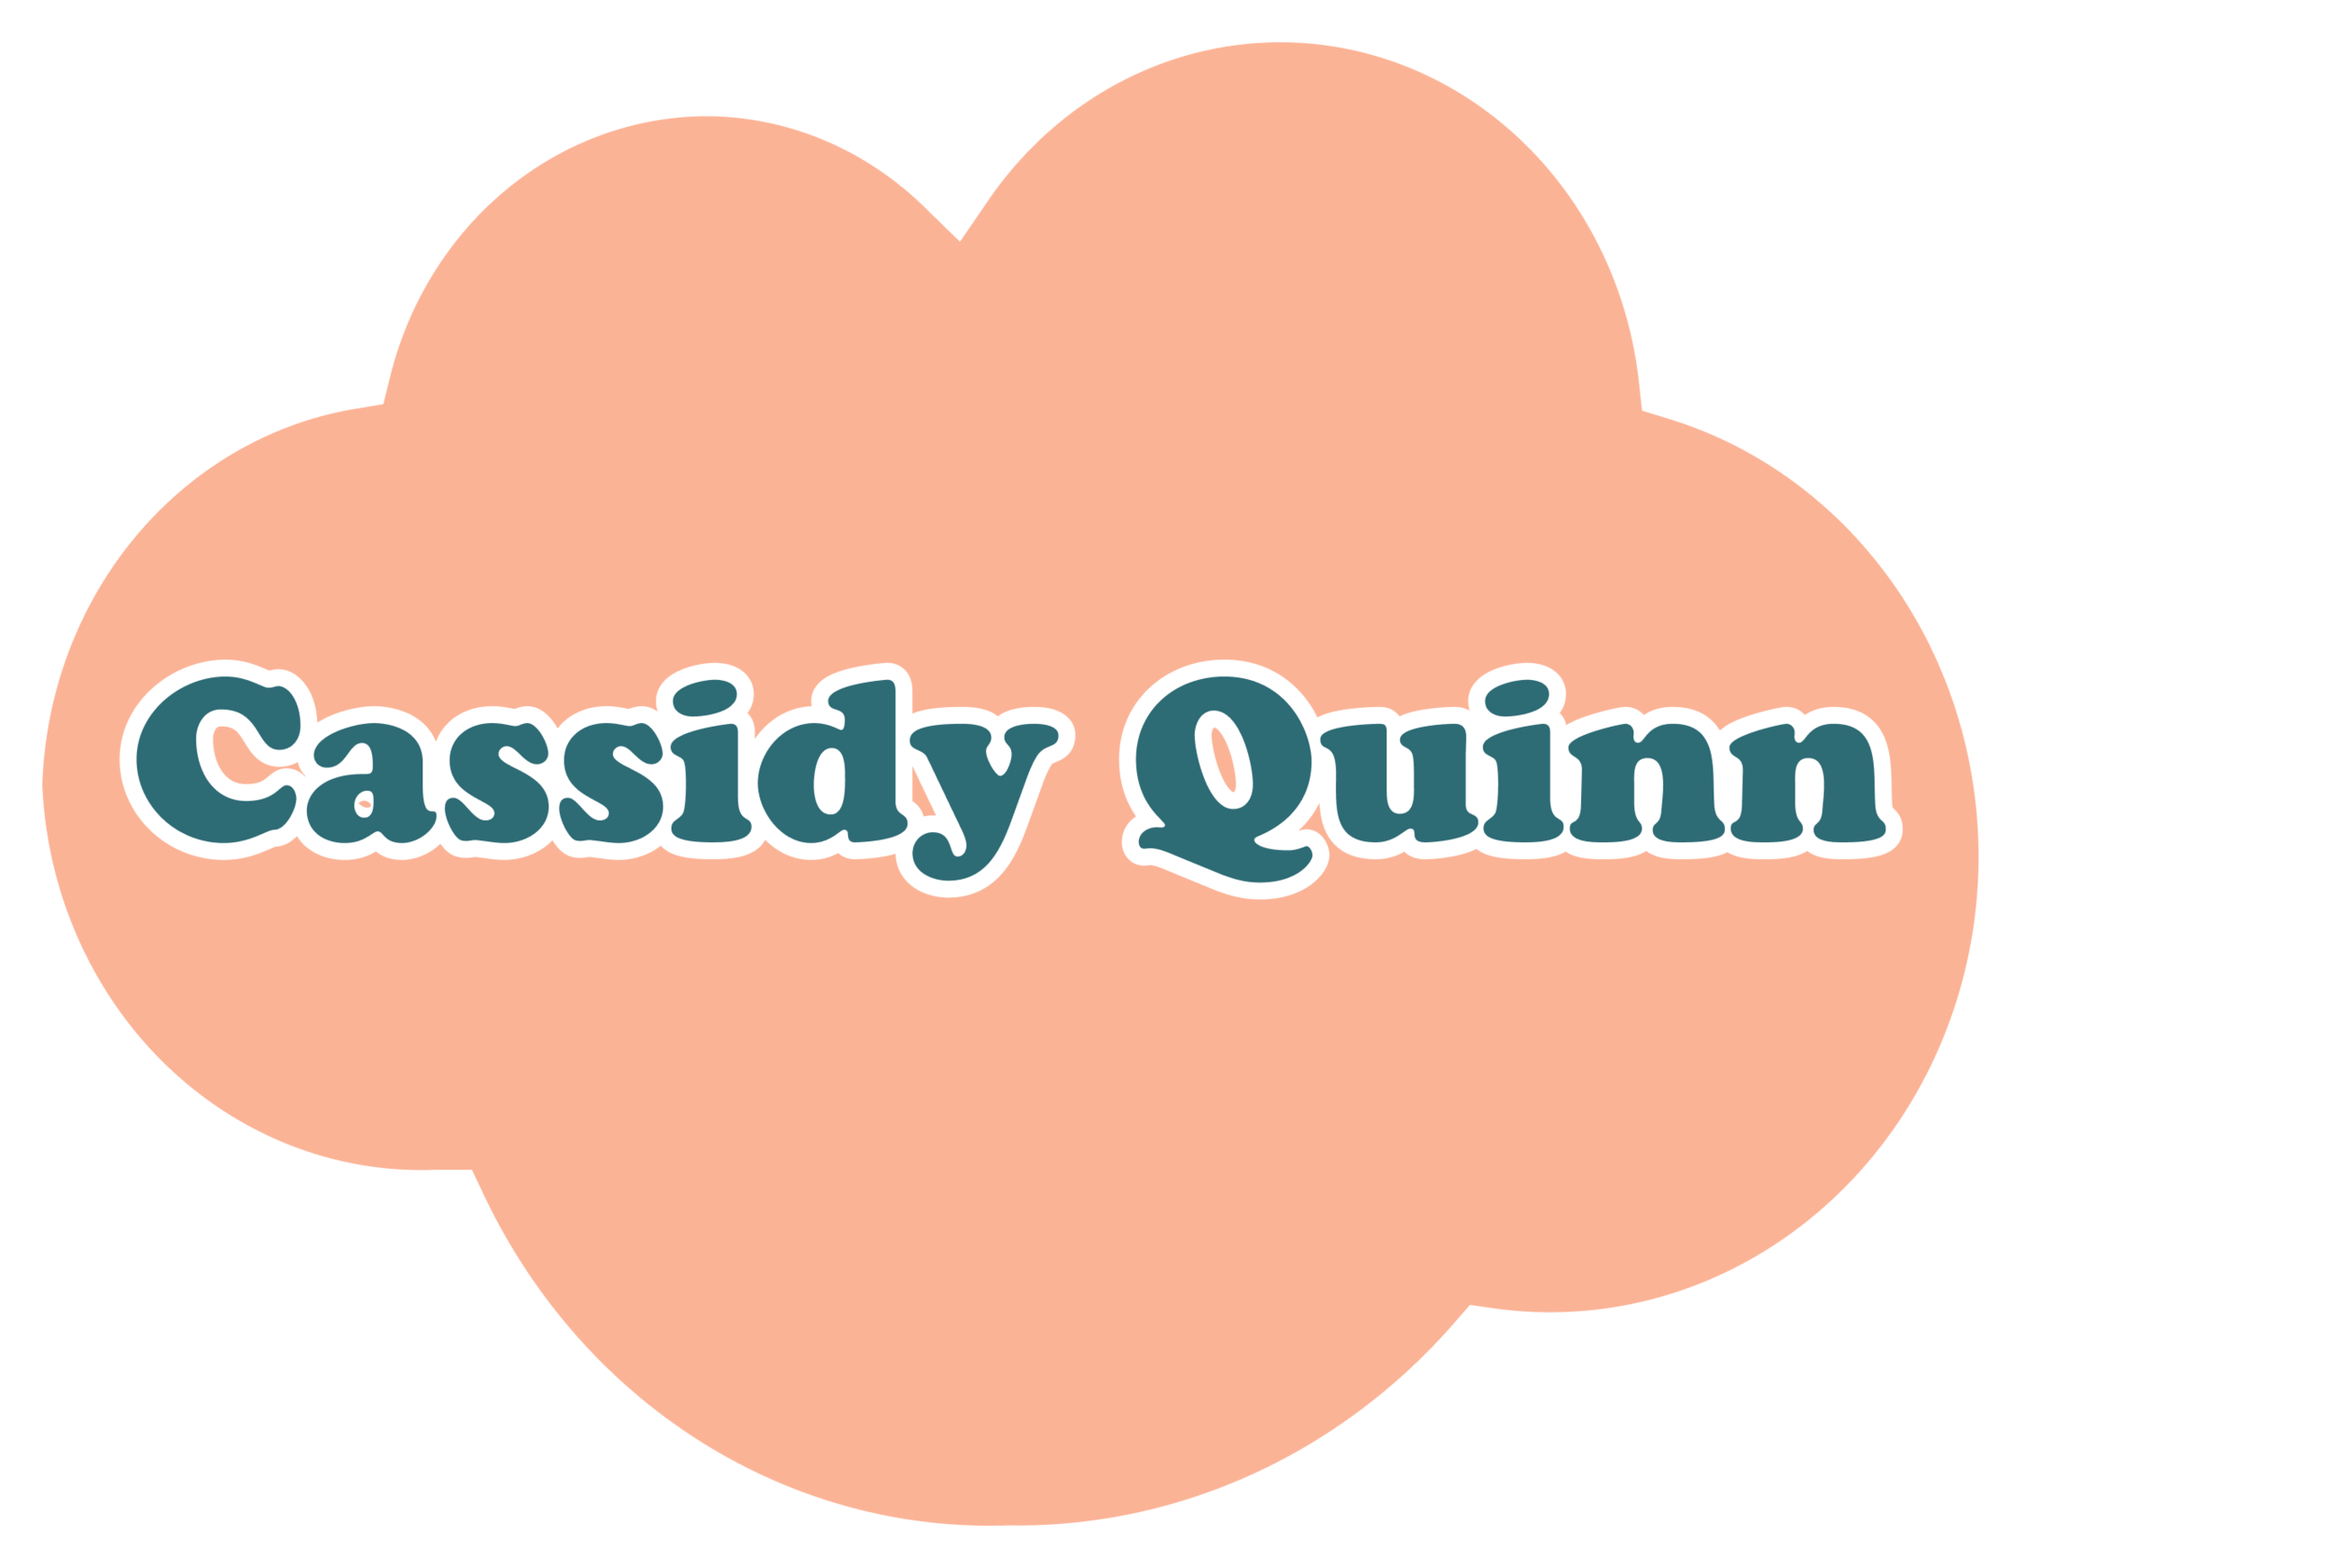 Cassidy Quinn